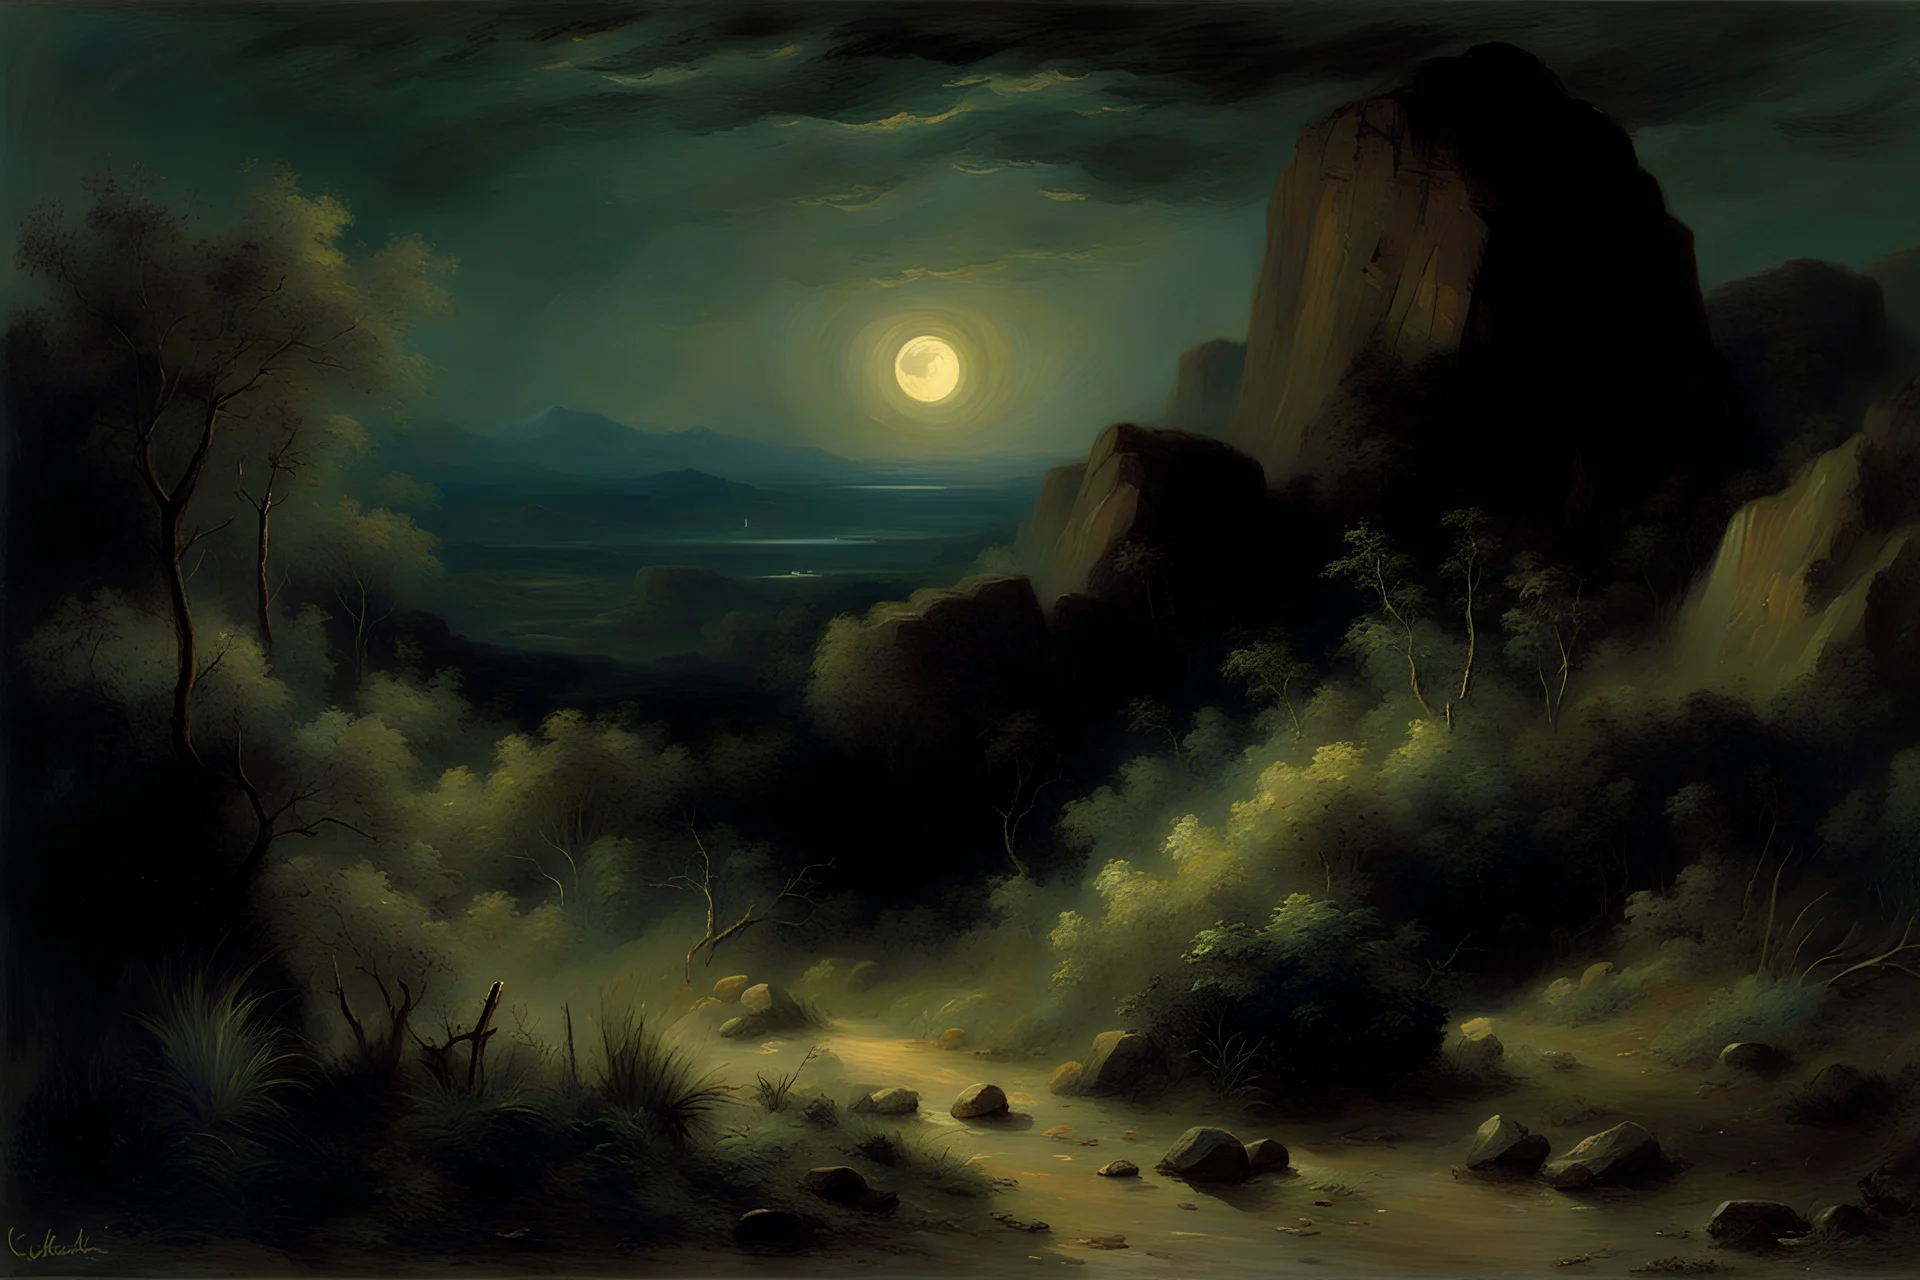 Night, rocks, vegetations, mountains, charles leickert impressionism p